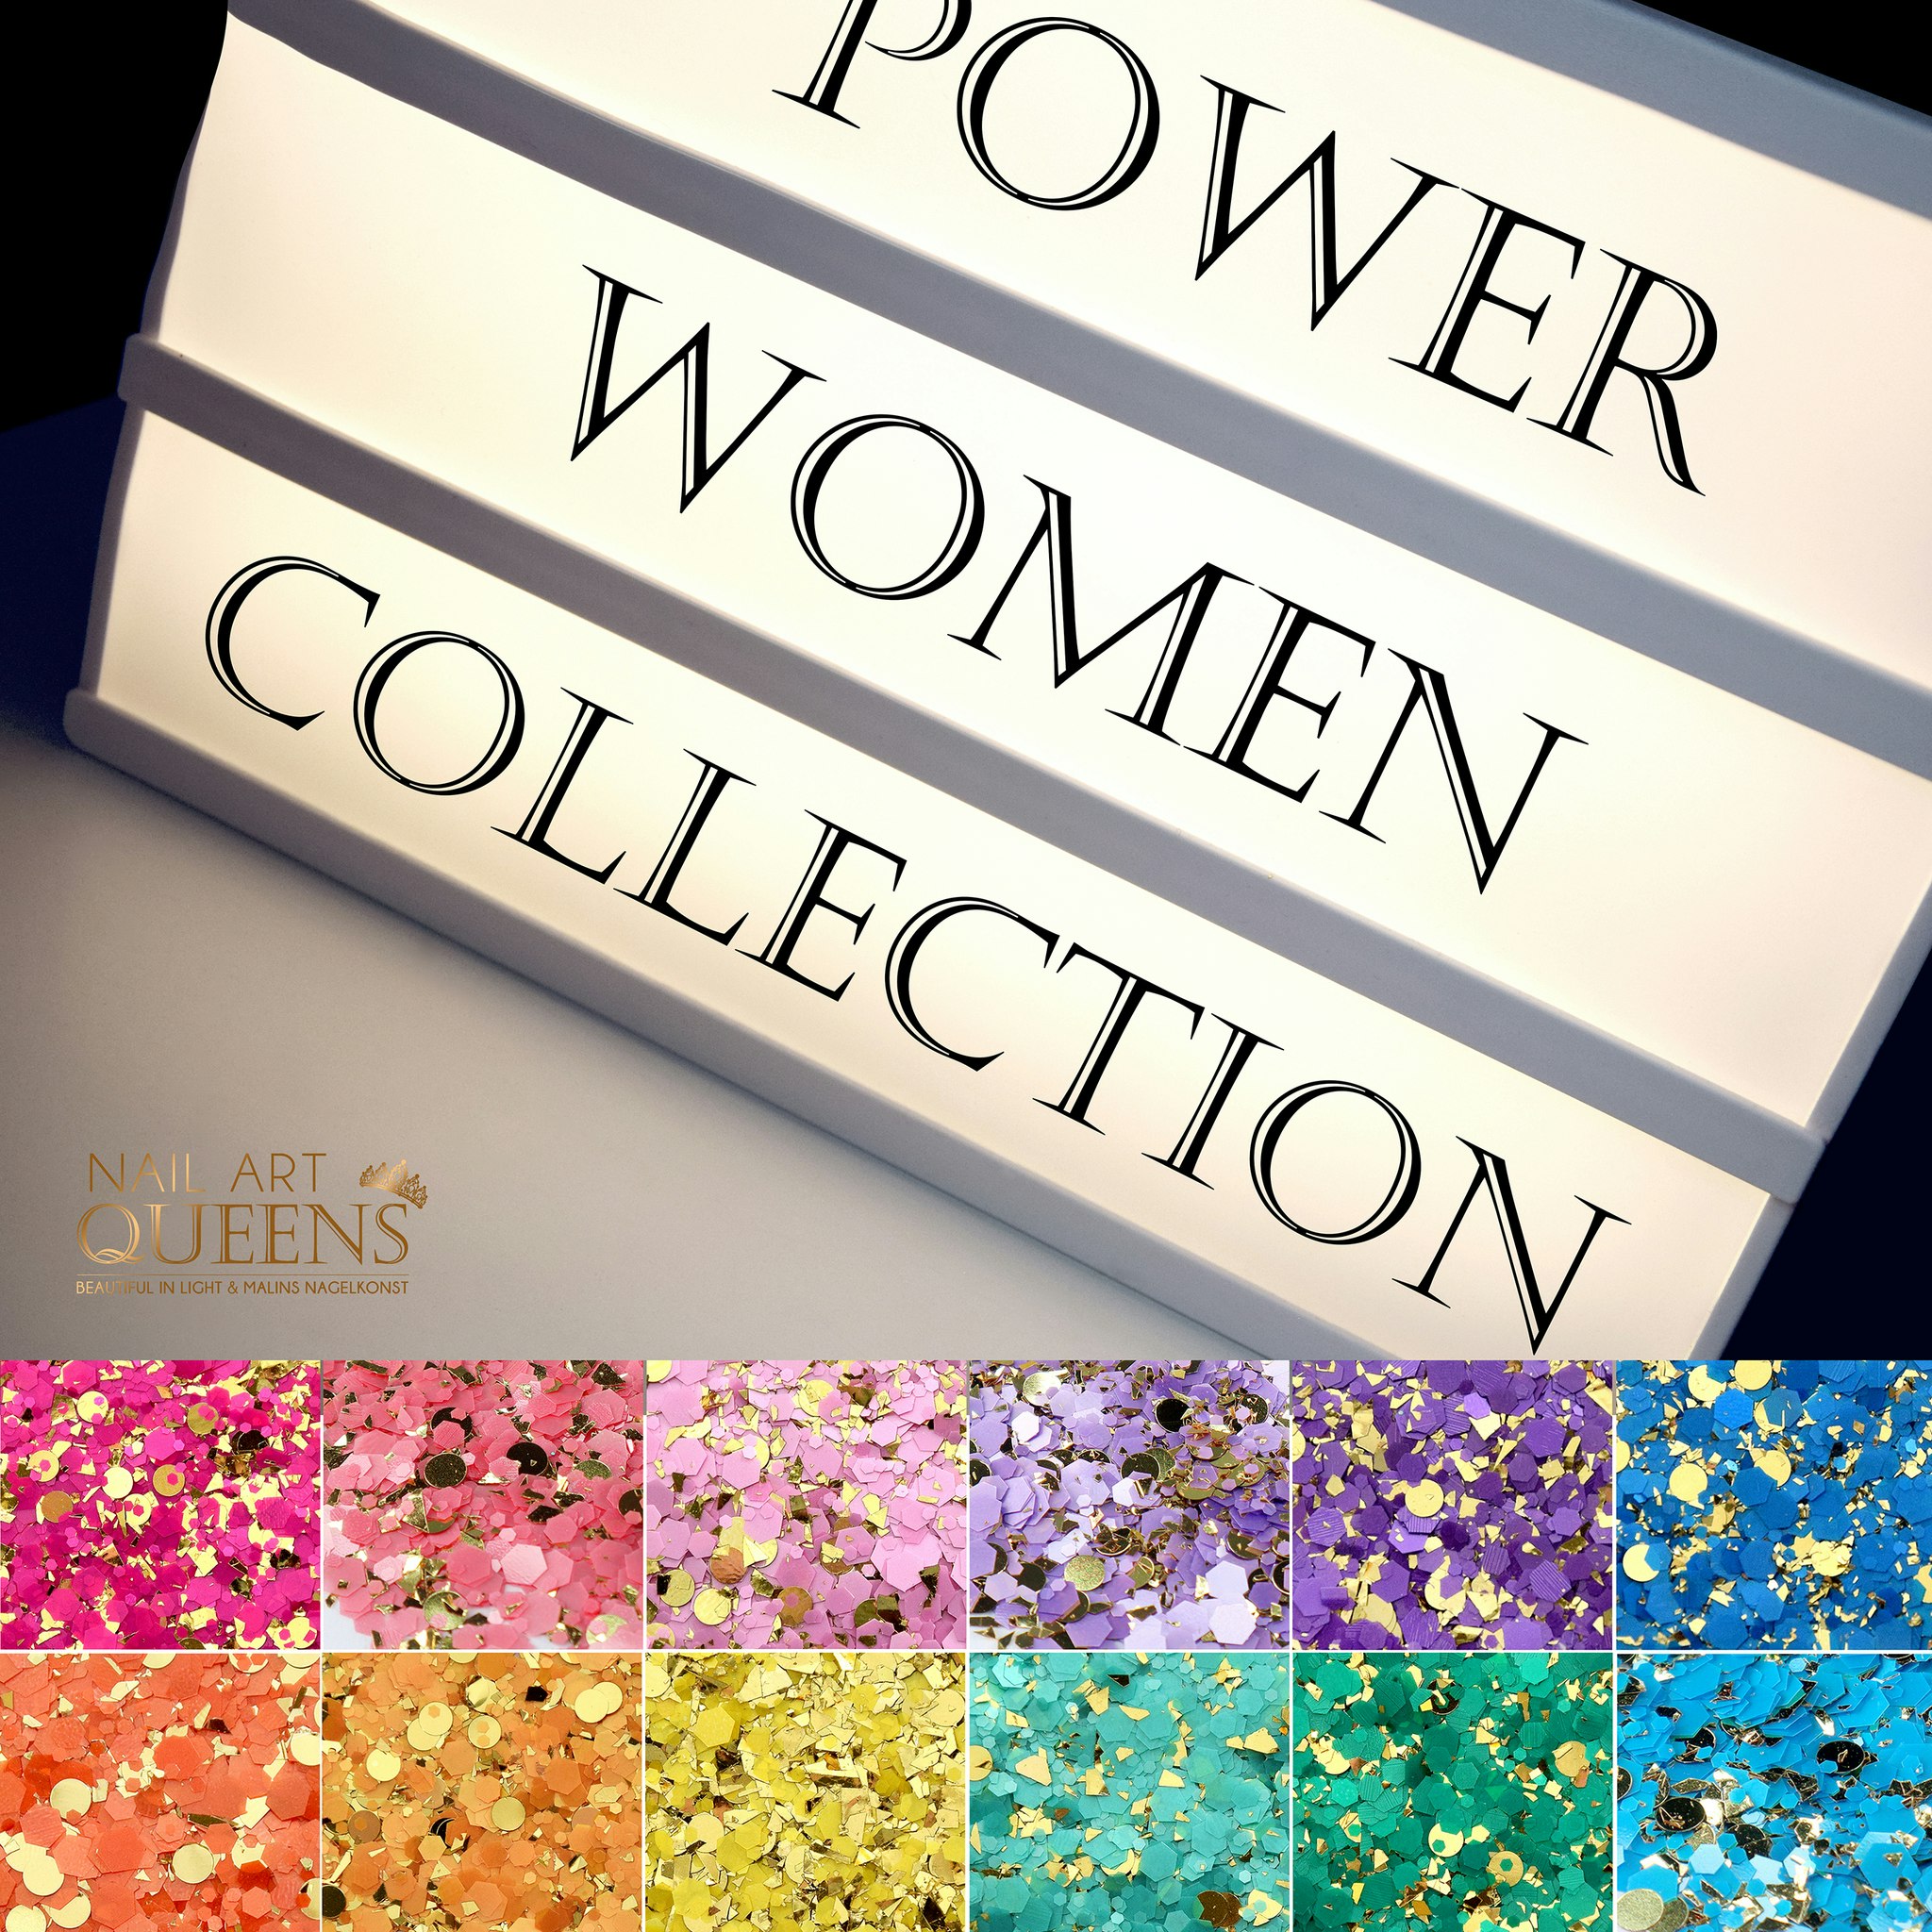 Power women glitter collection